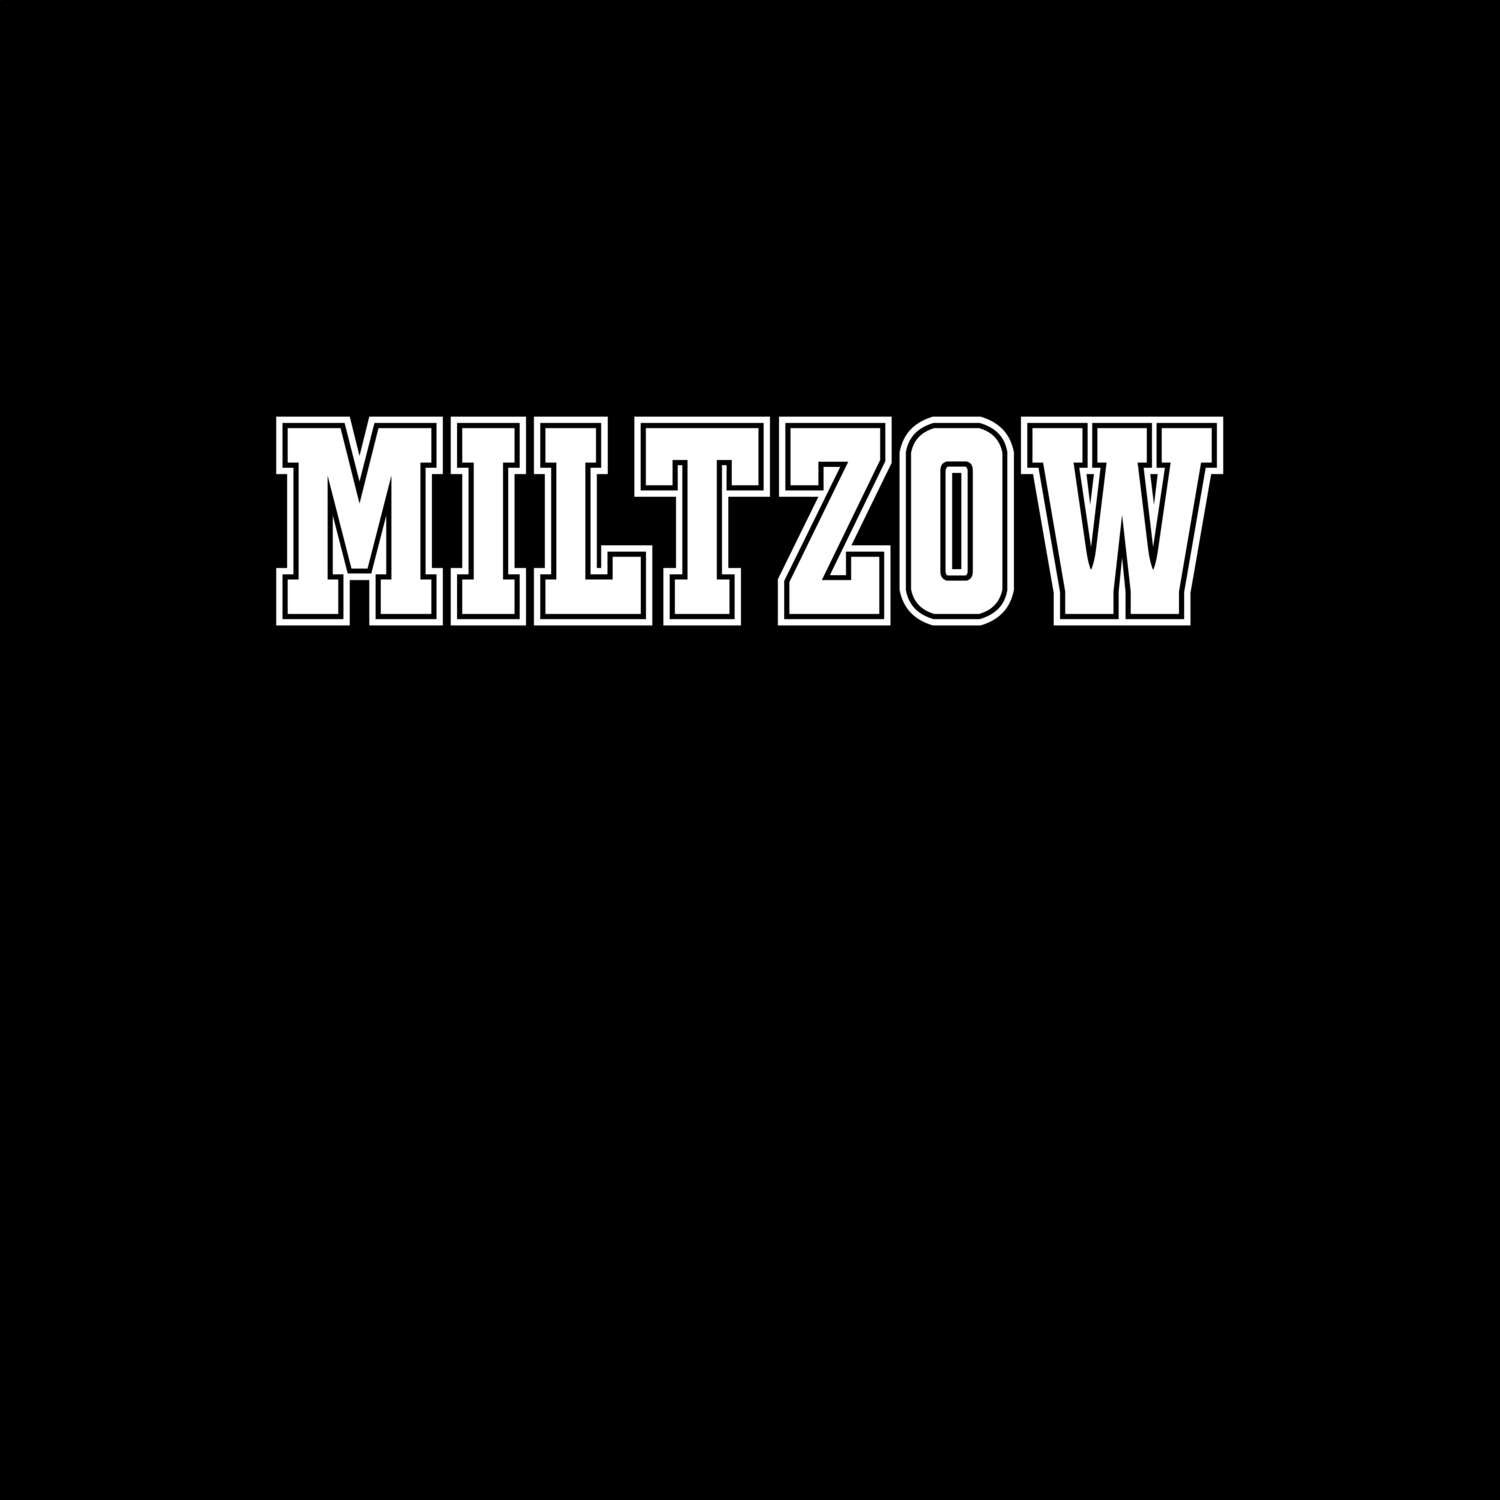 Miltzow T-Shirt »Classic«